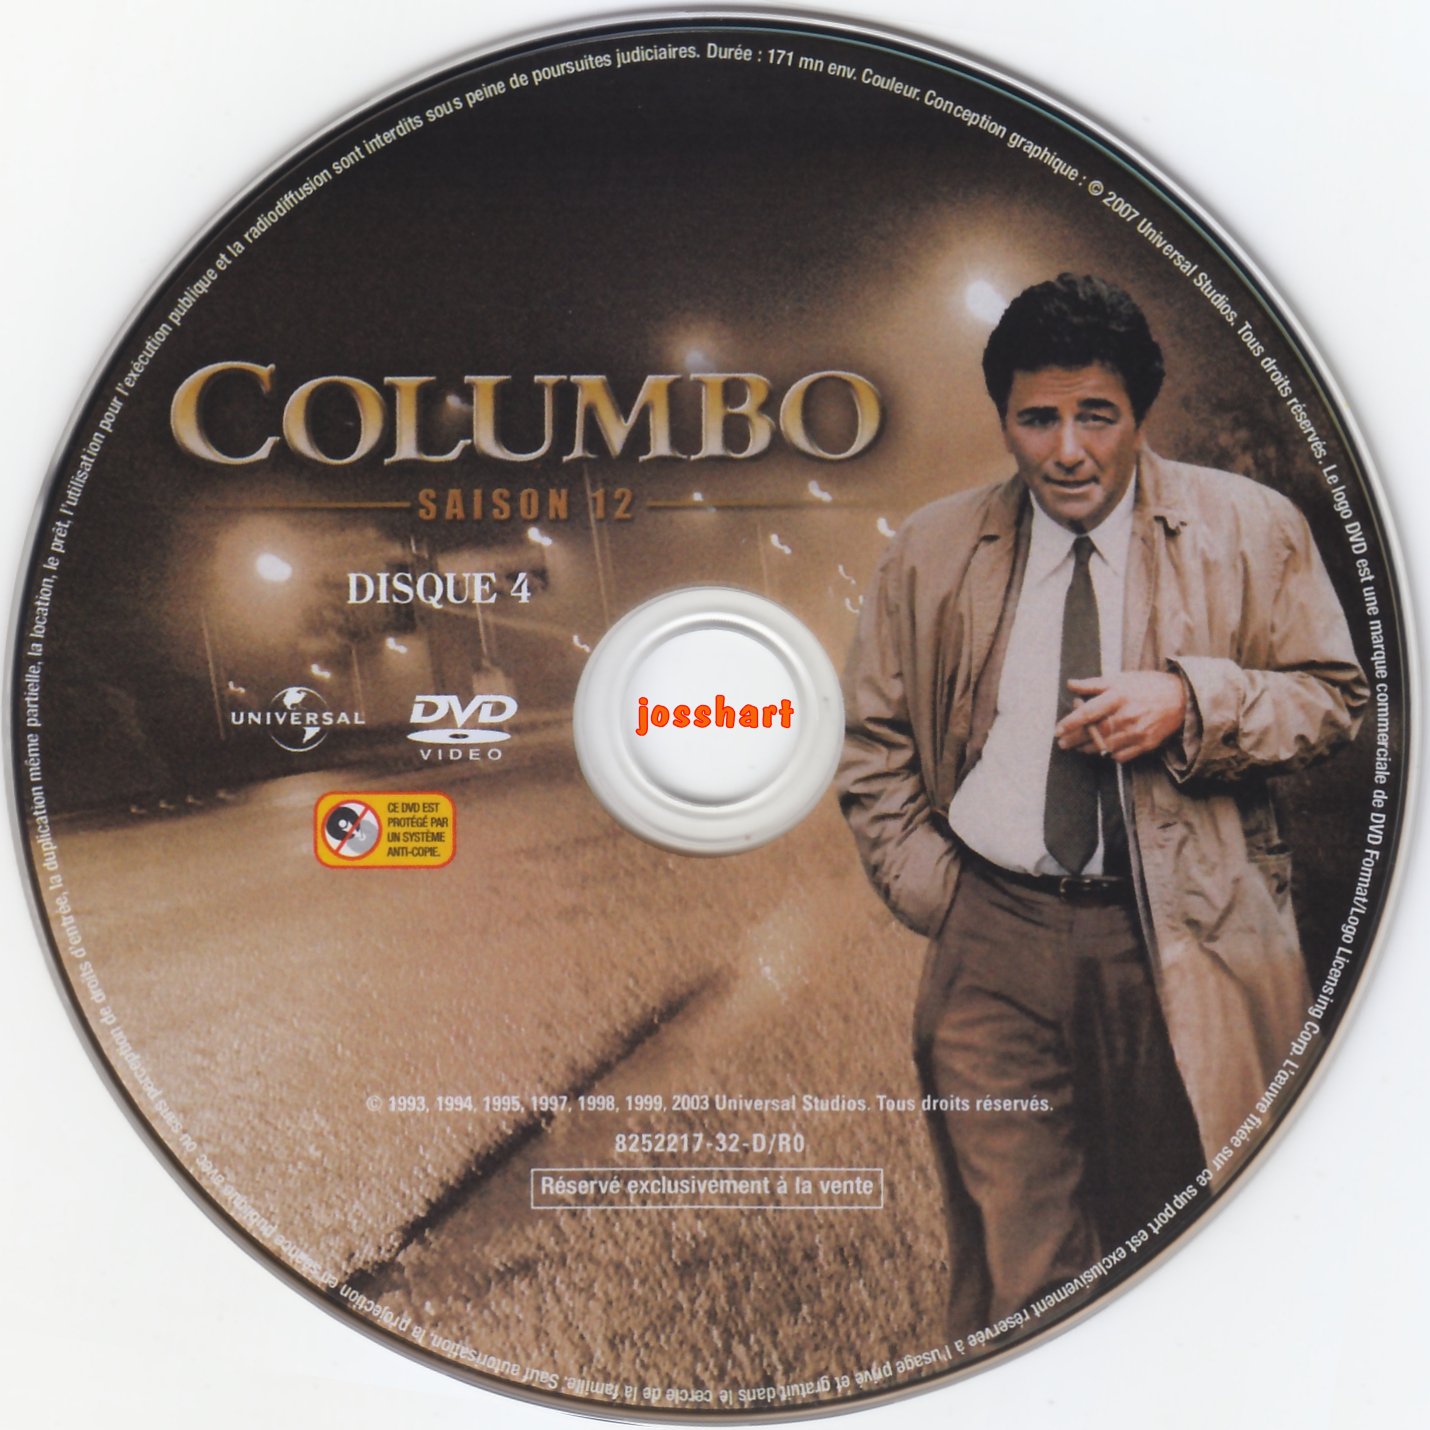 Columbo S12 DISC4